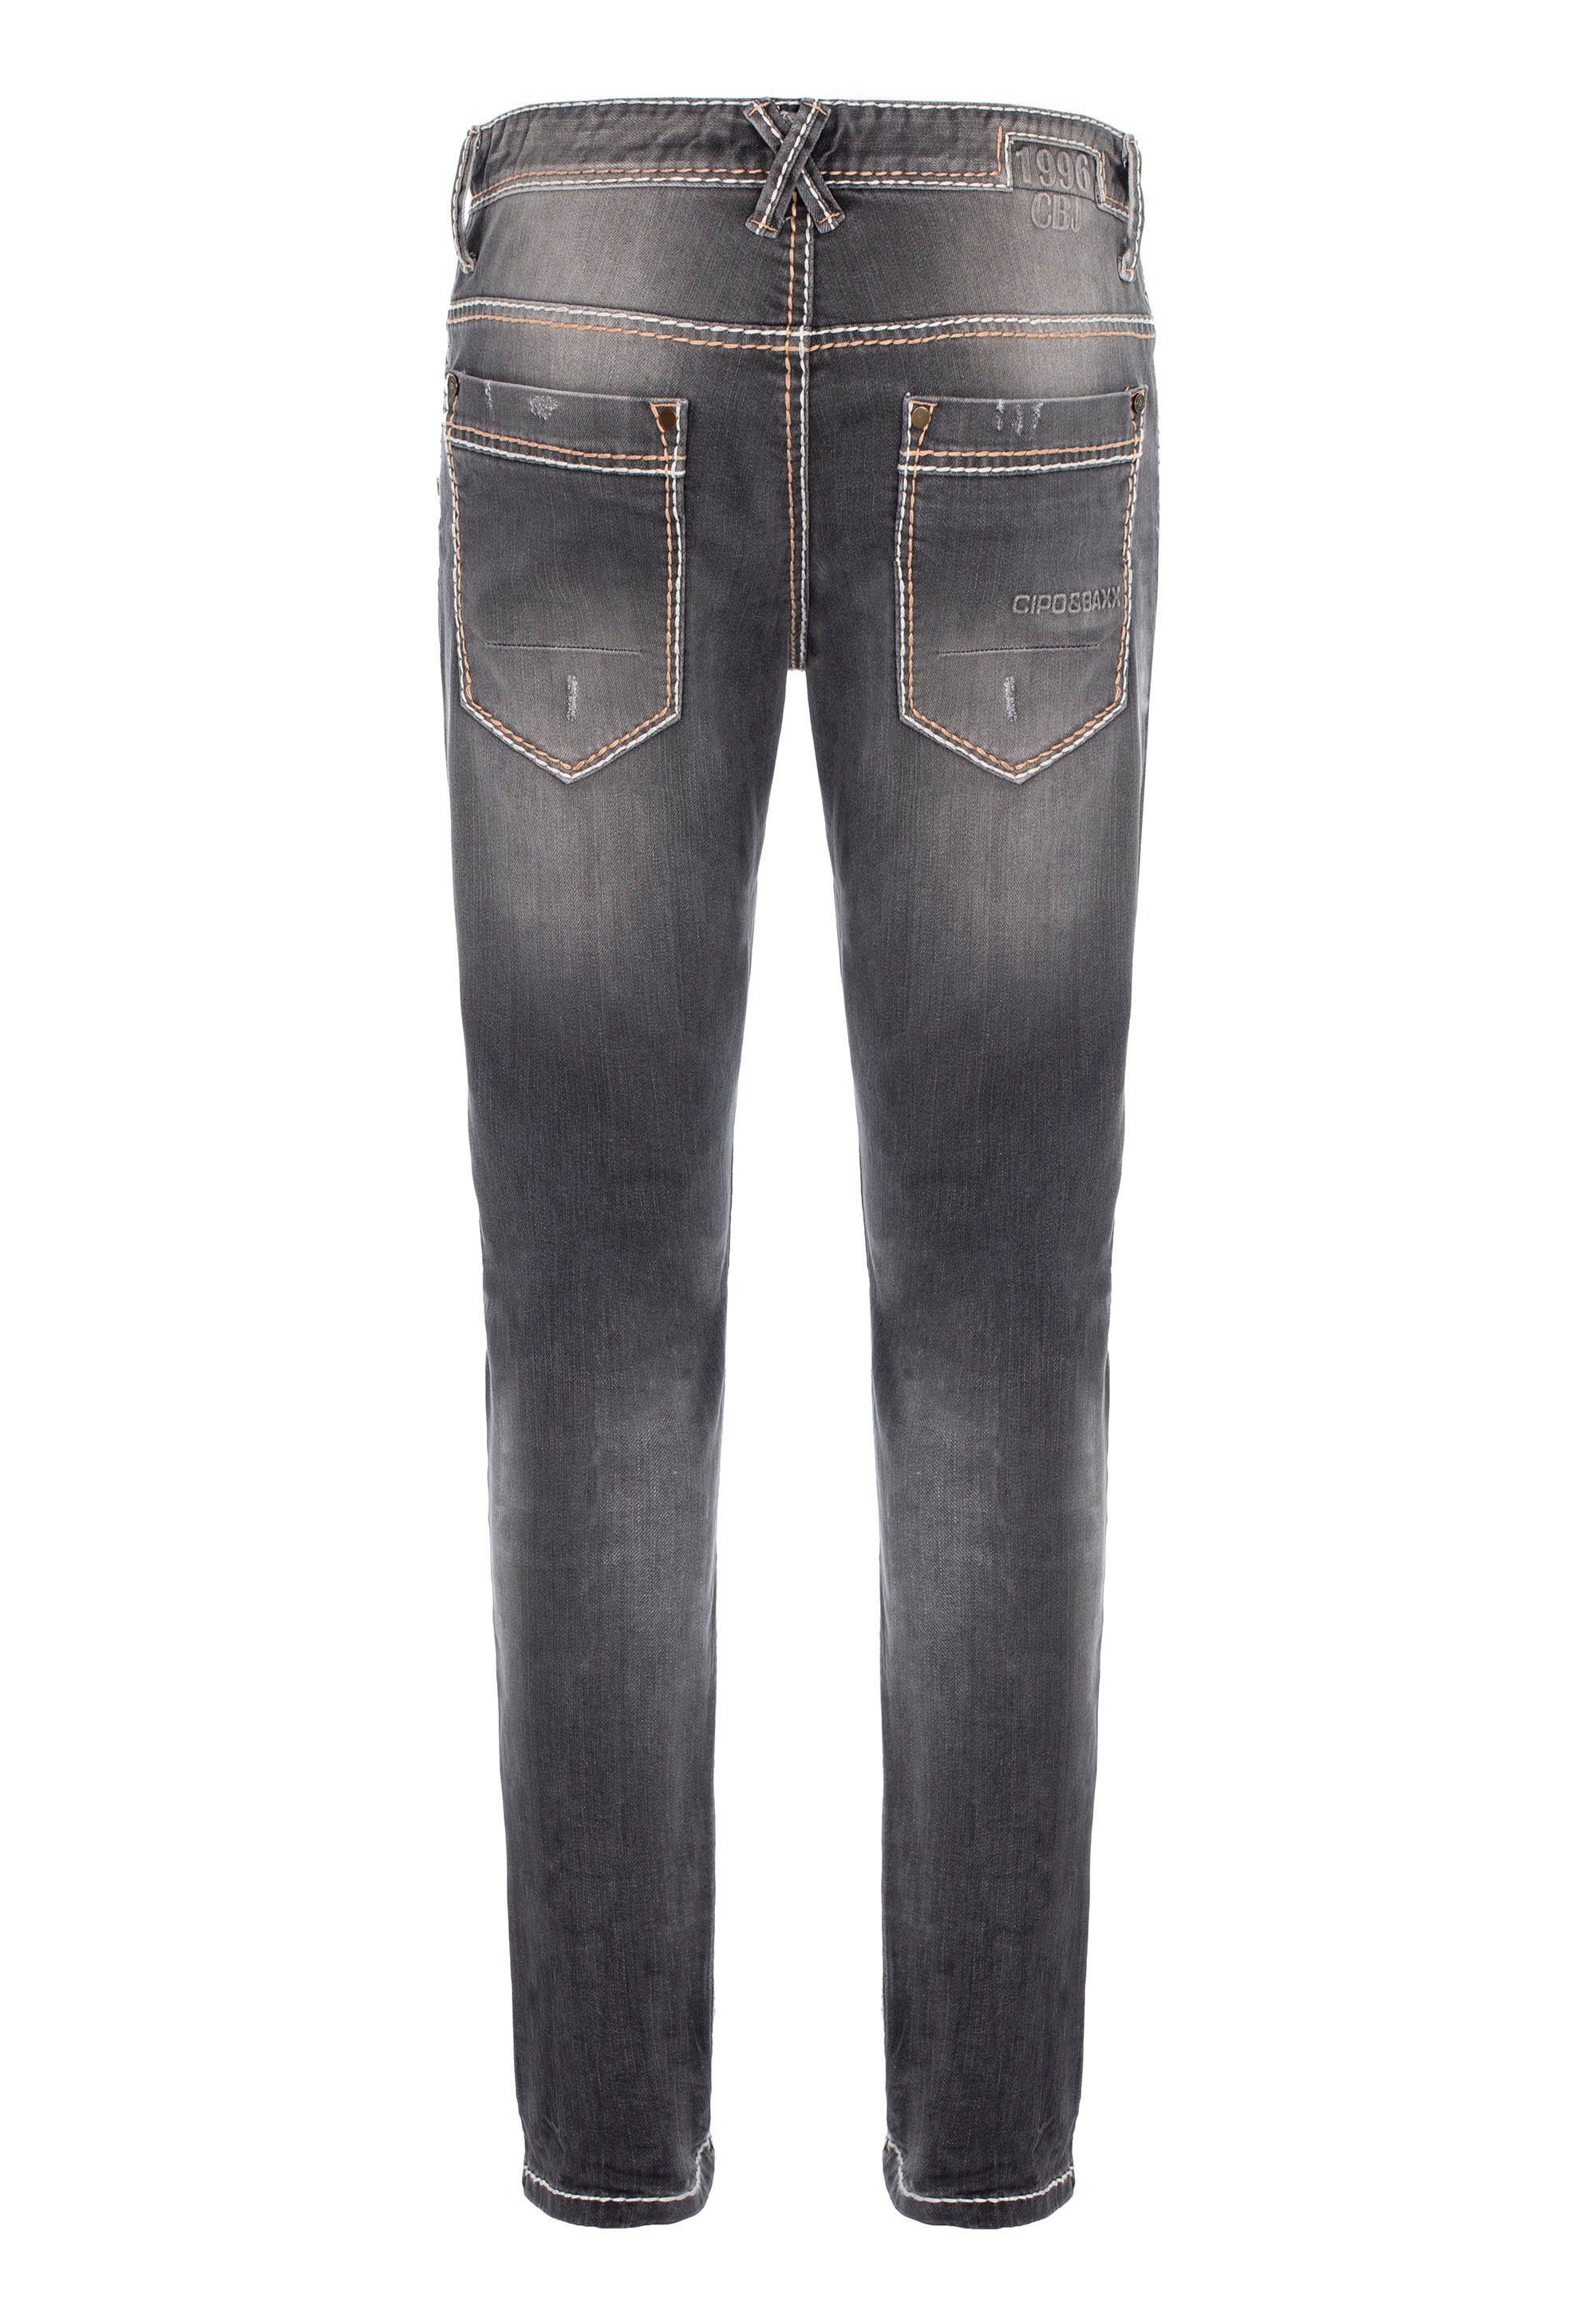 & Cipo modernem in CD668 Jeans Fit-Schnitt Bequeme Straight Baxx